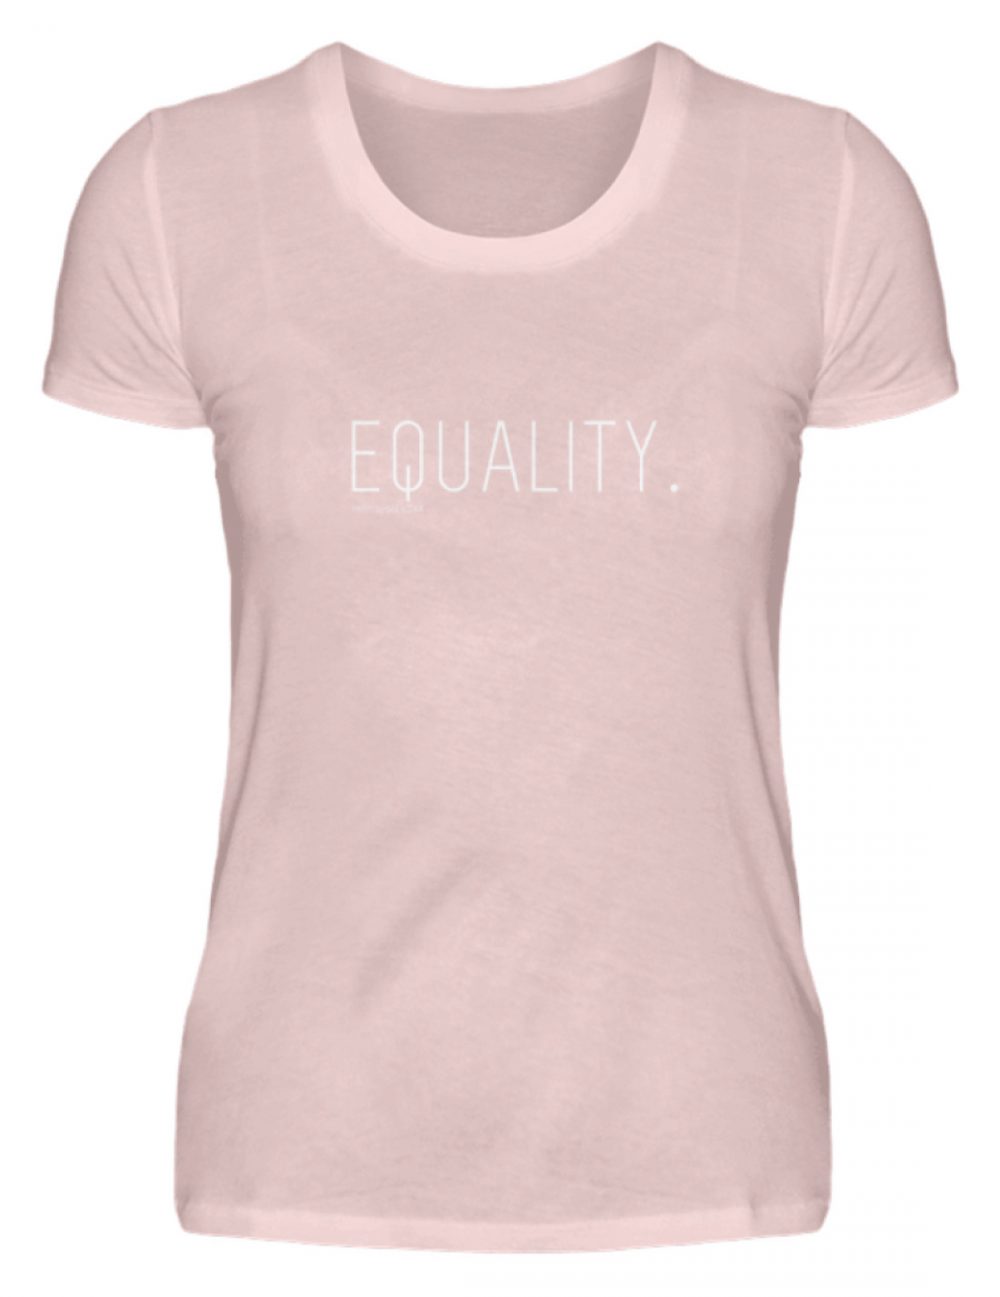 EQUALITY. - Damen Premiumshirt-5949